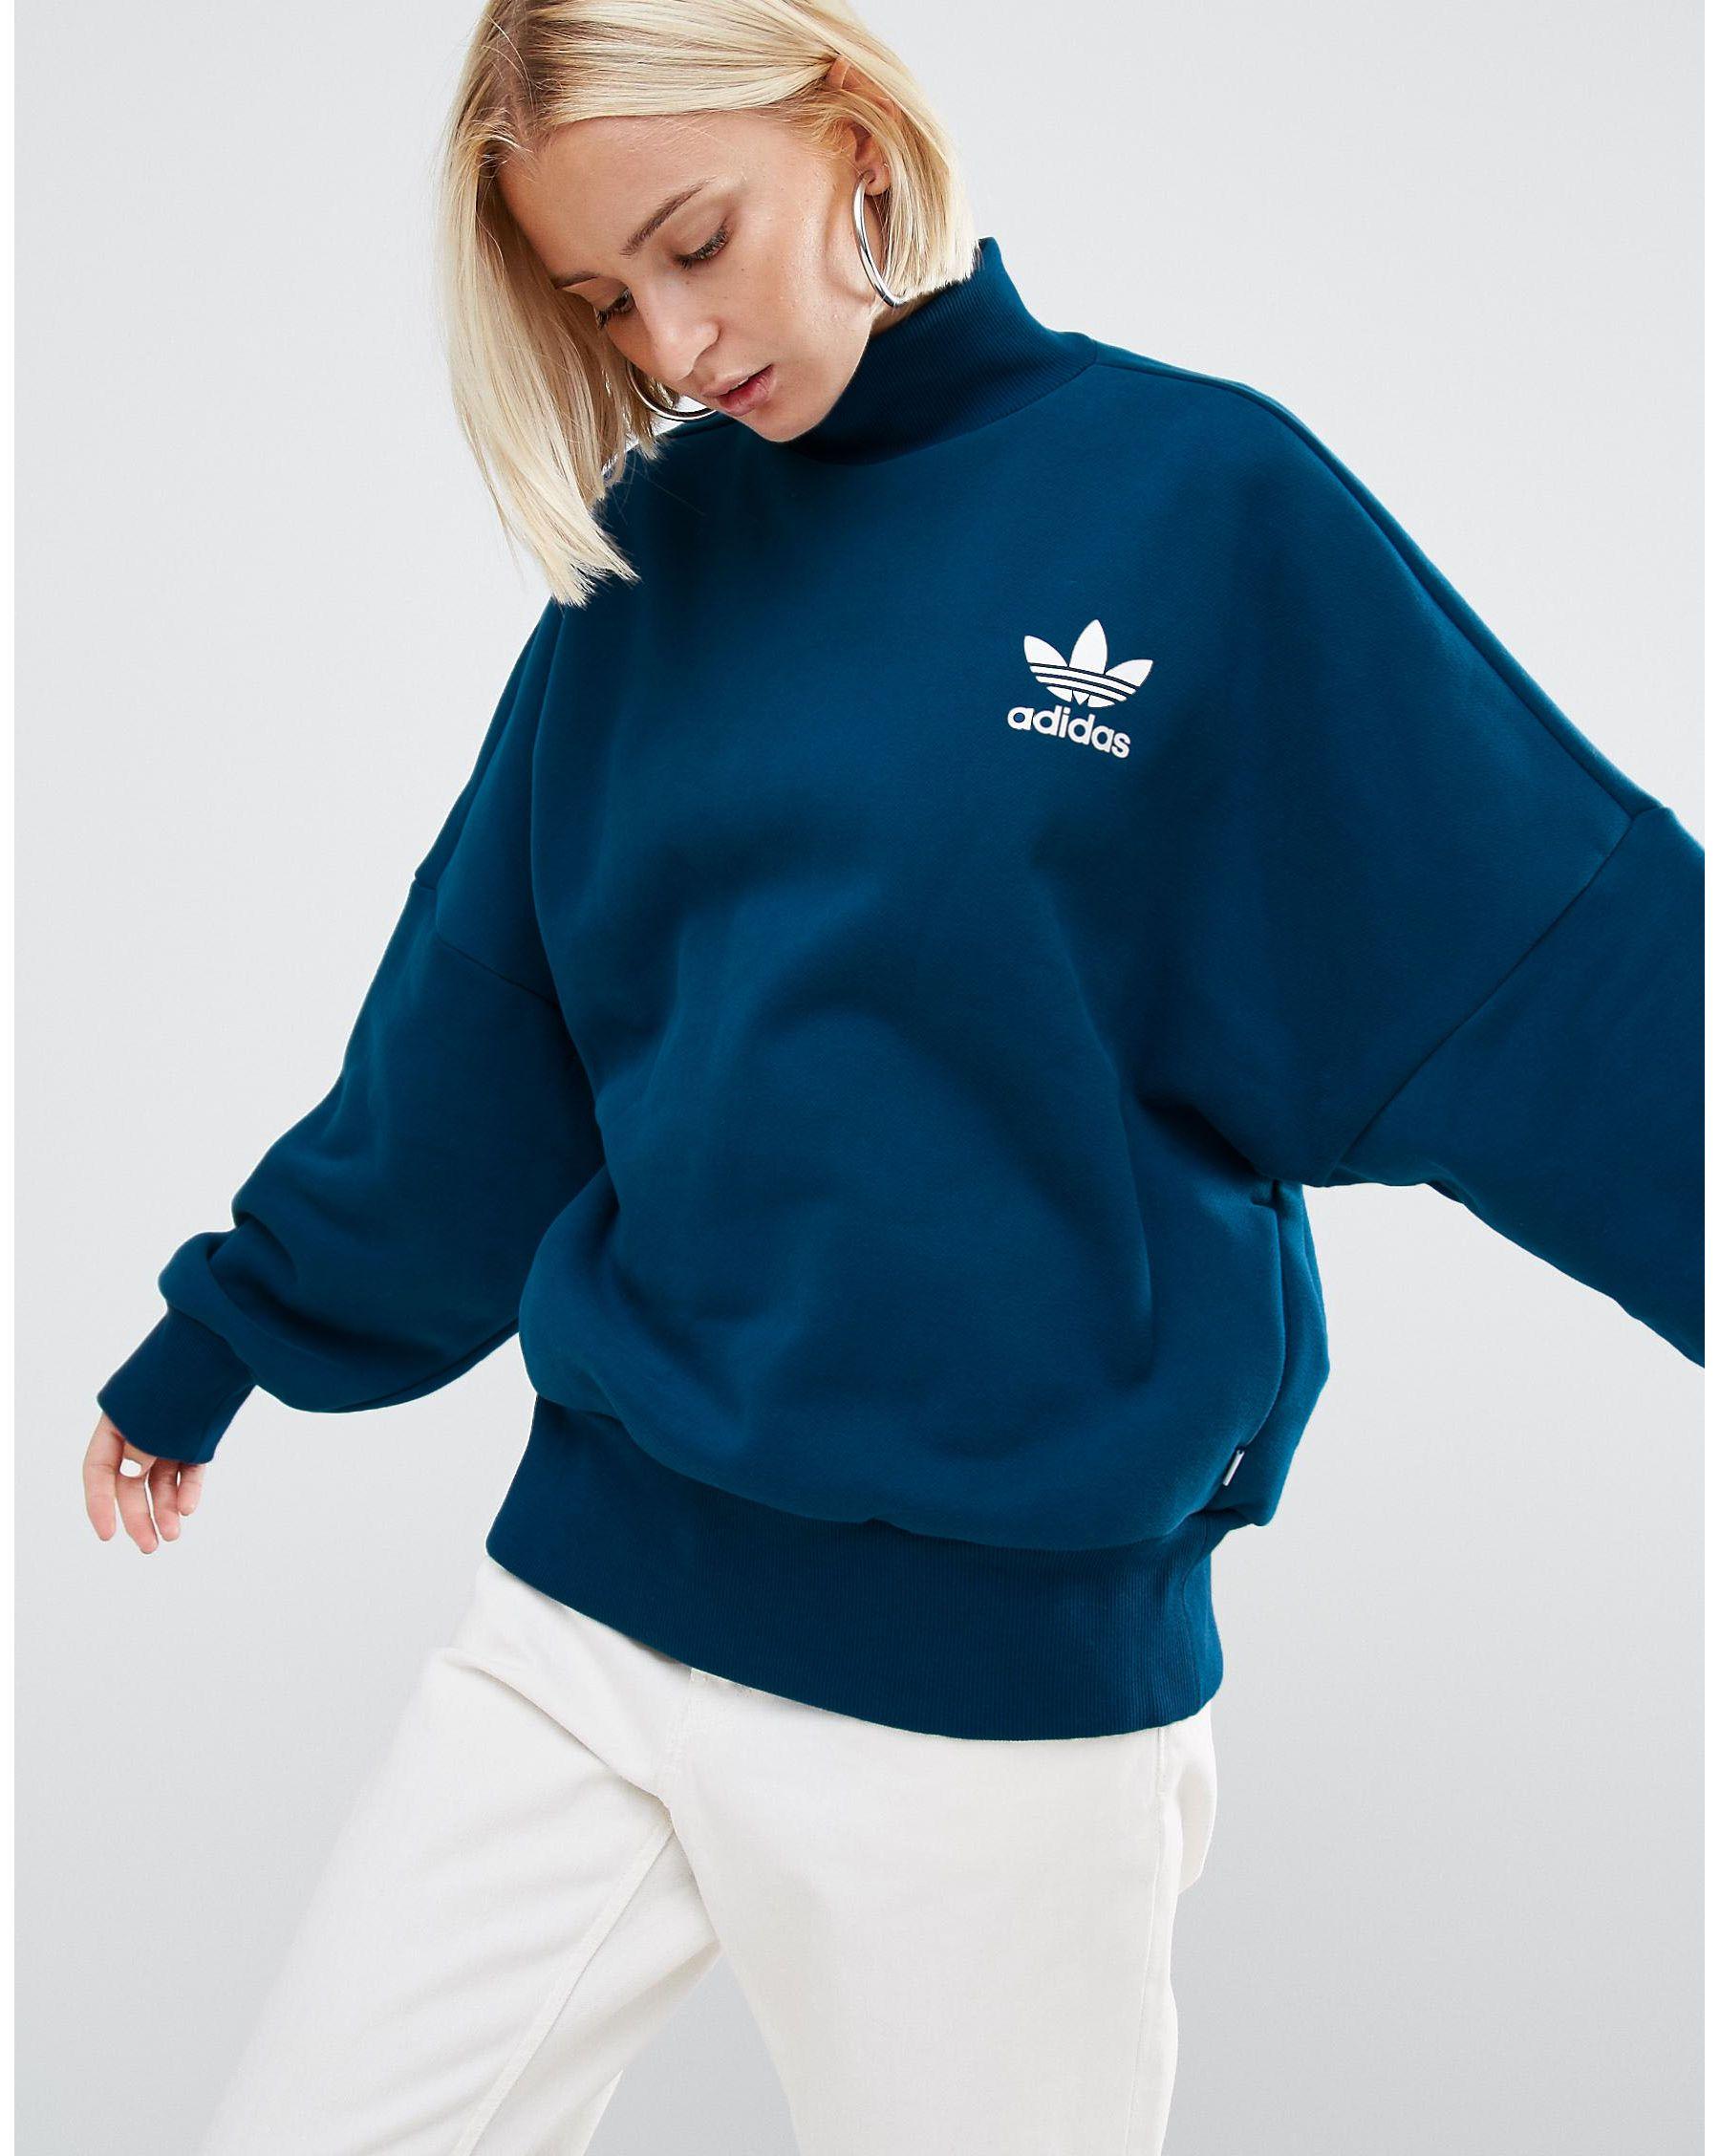 adidas Originals Cotton Originals High Sweatshirt Trefoil Logo in Blue - Lyst